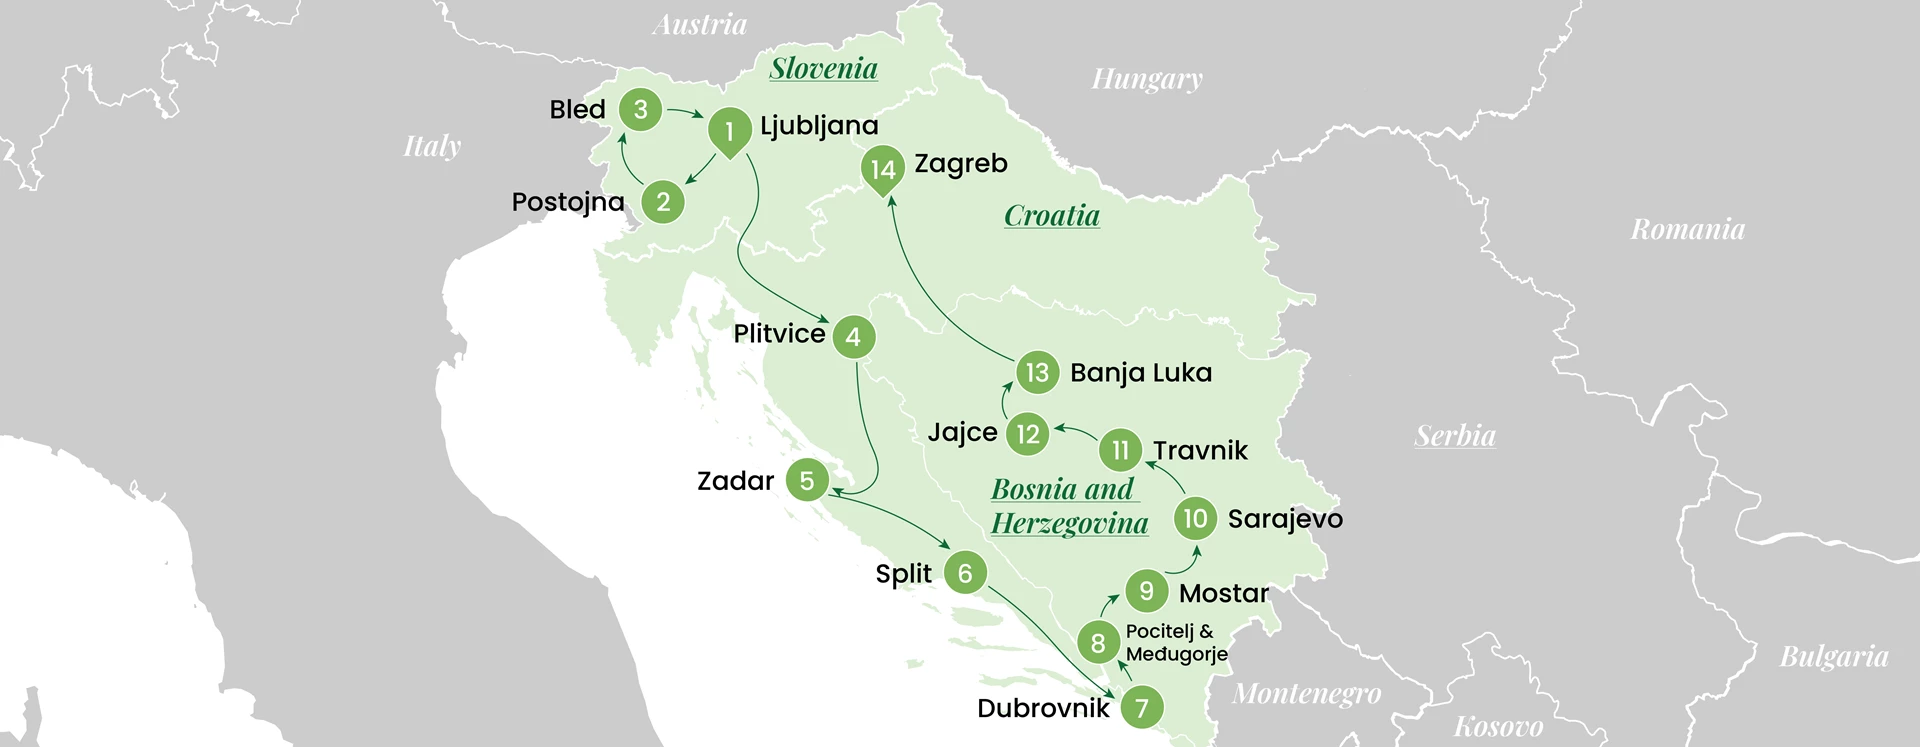 Slovenia, Croatia, Bosnia and Herzegovina tour